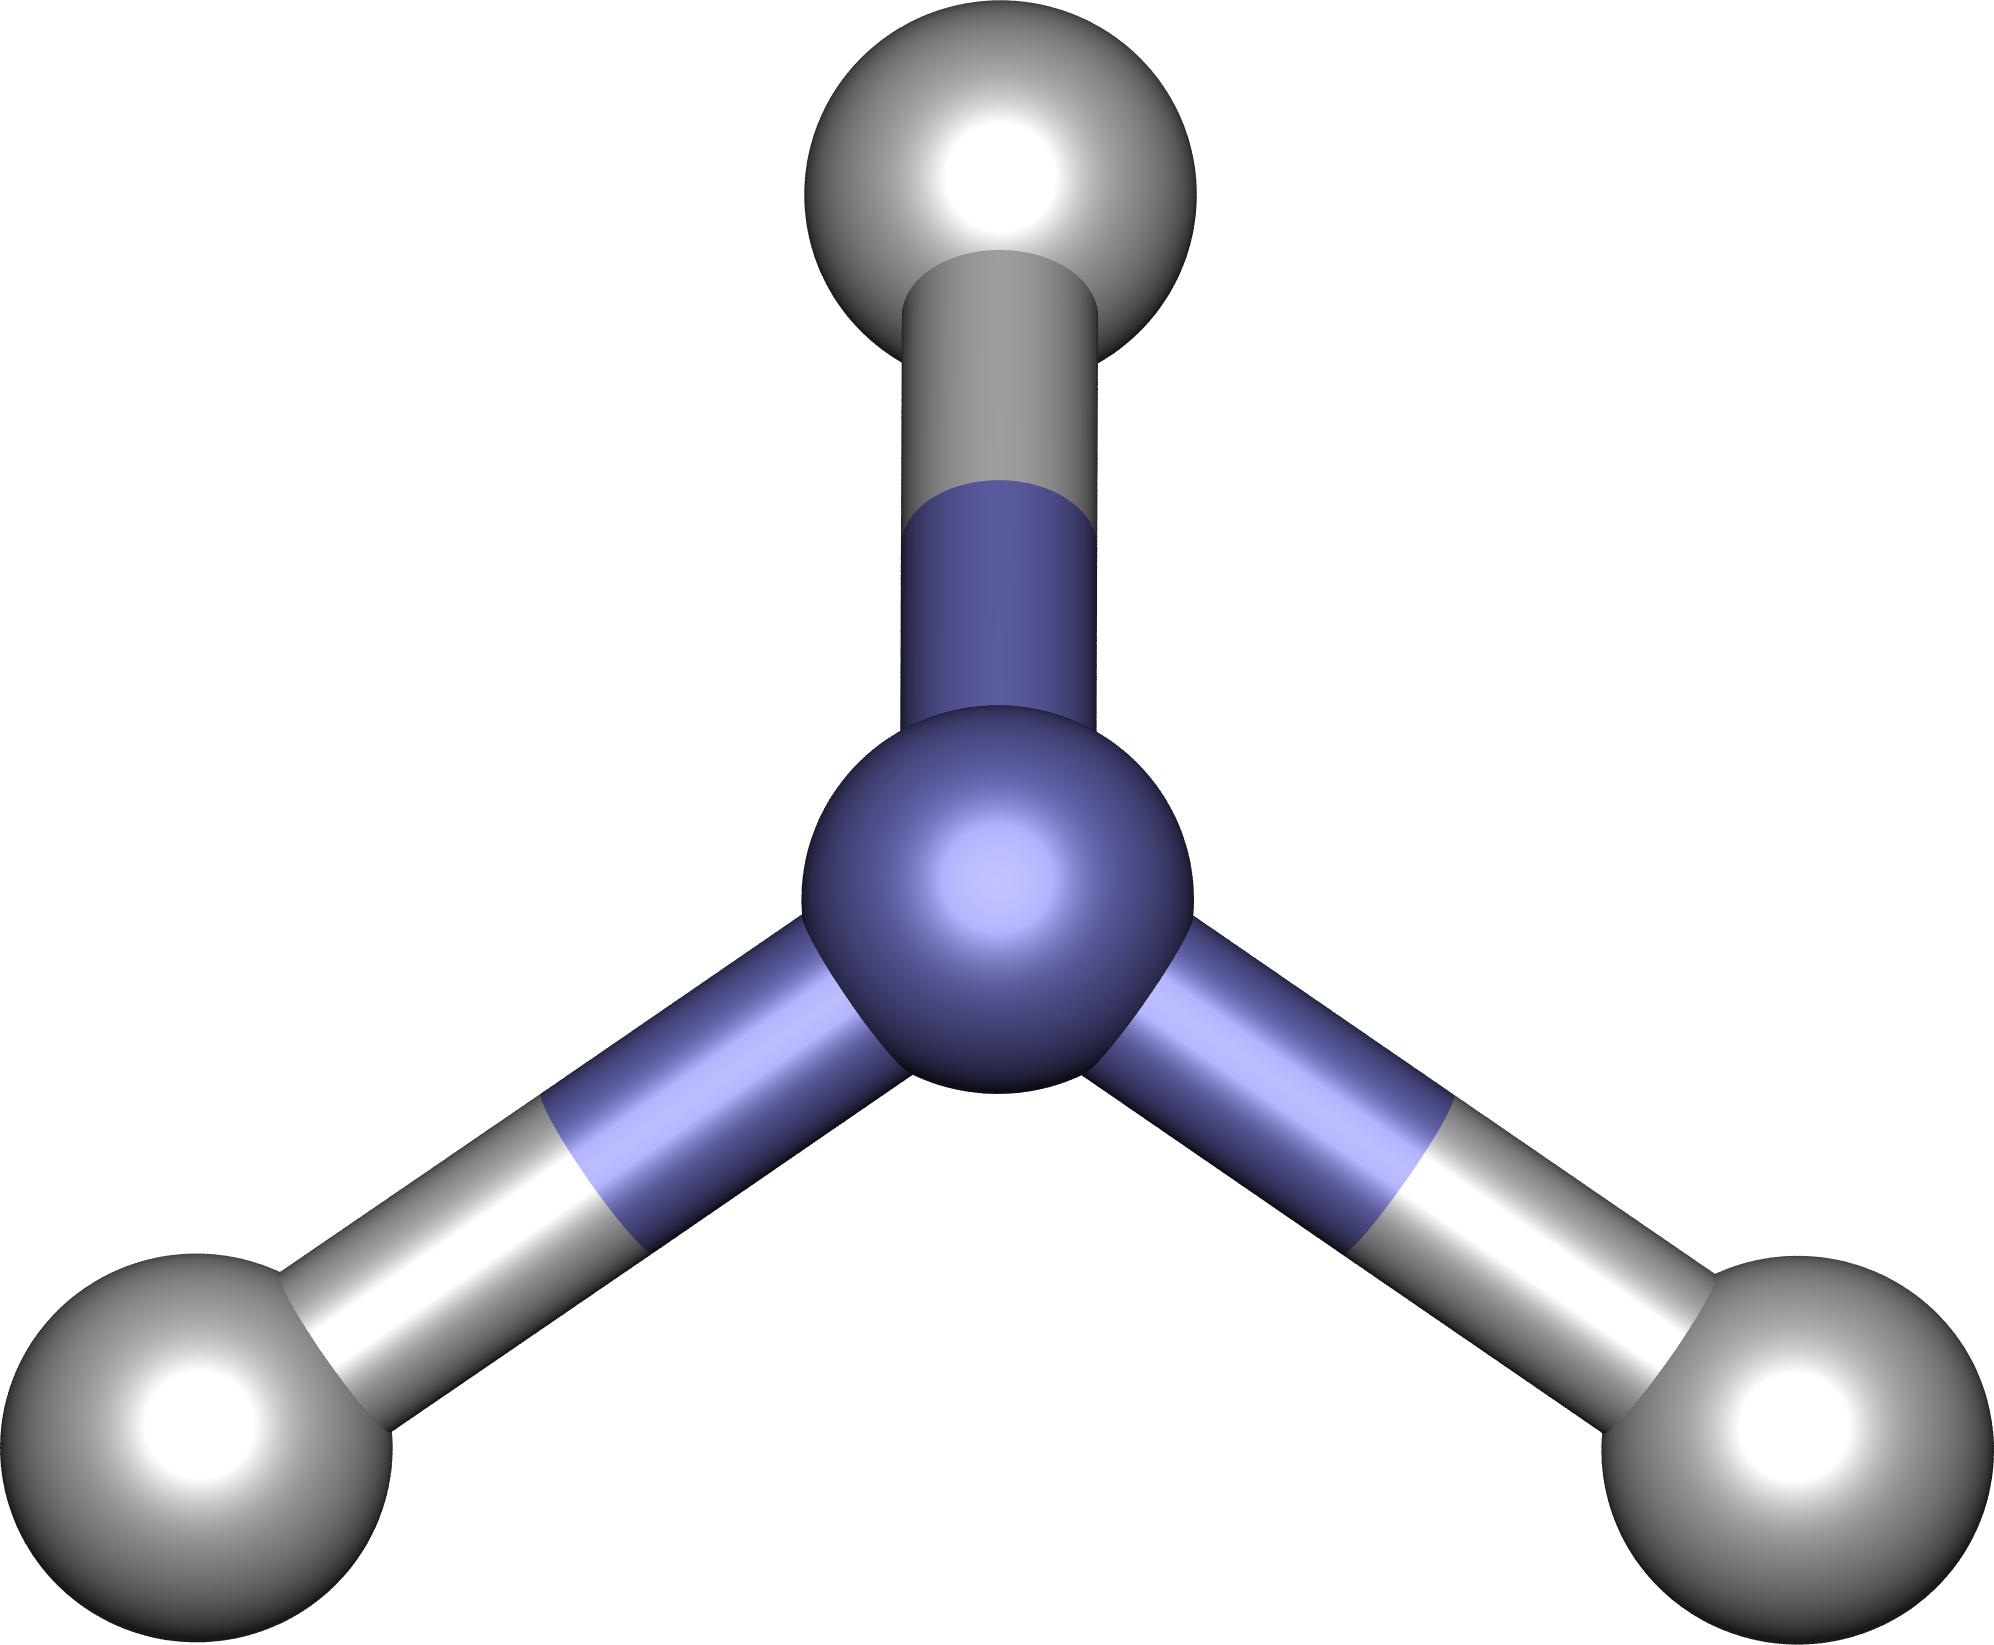 Nh в химии. Молекула аммиака nh3. Модель молекулы аммиака nh3. Формула молекулы аммиака. Тригональная пирамида аммиака.